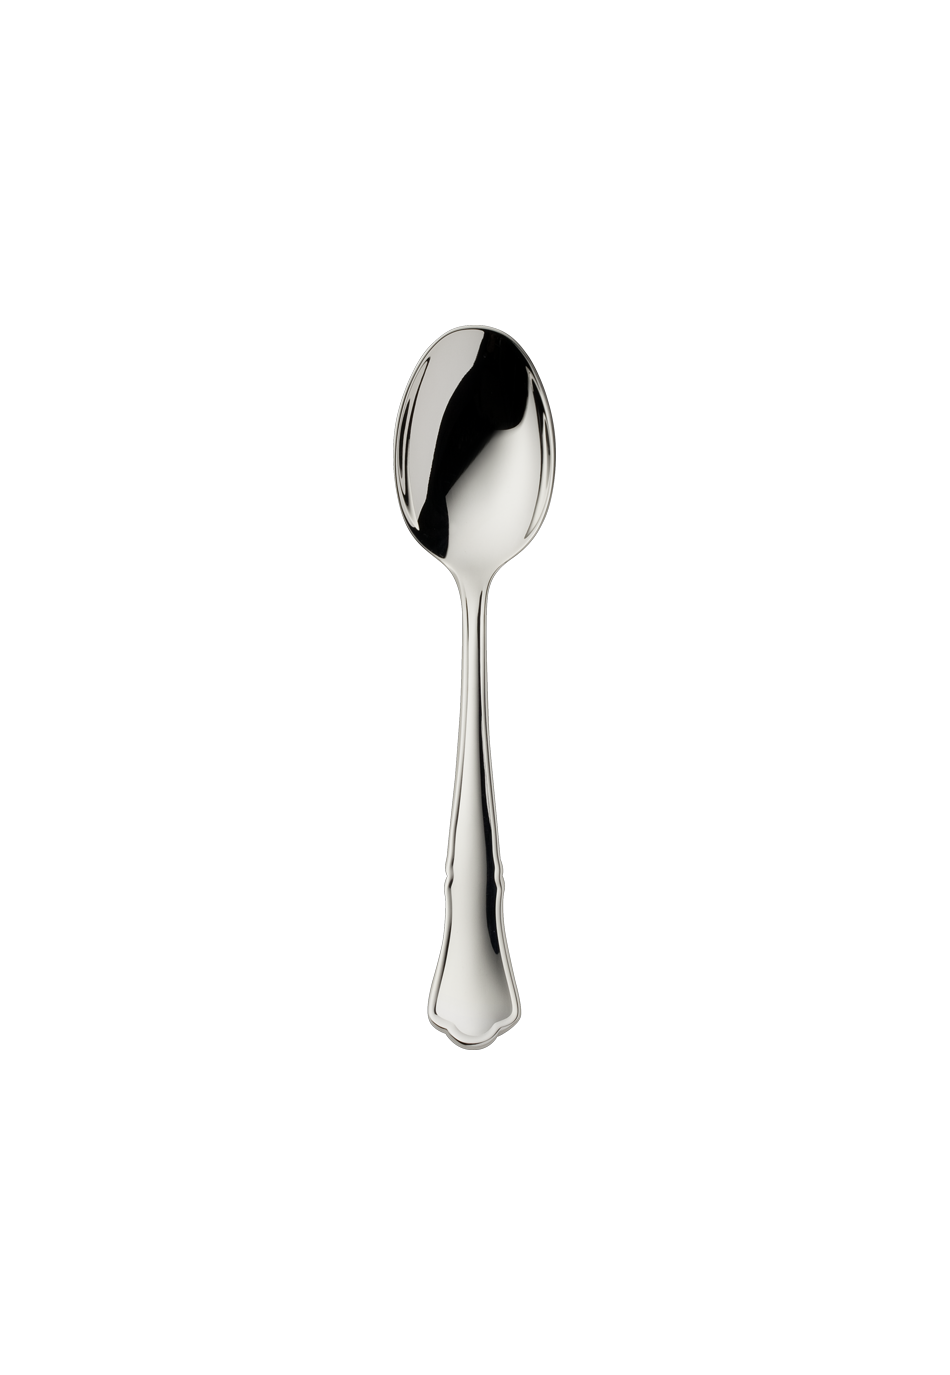 Alt-Chippendale Children's Spoon (150g massive silverplated)